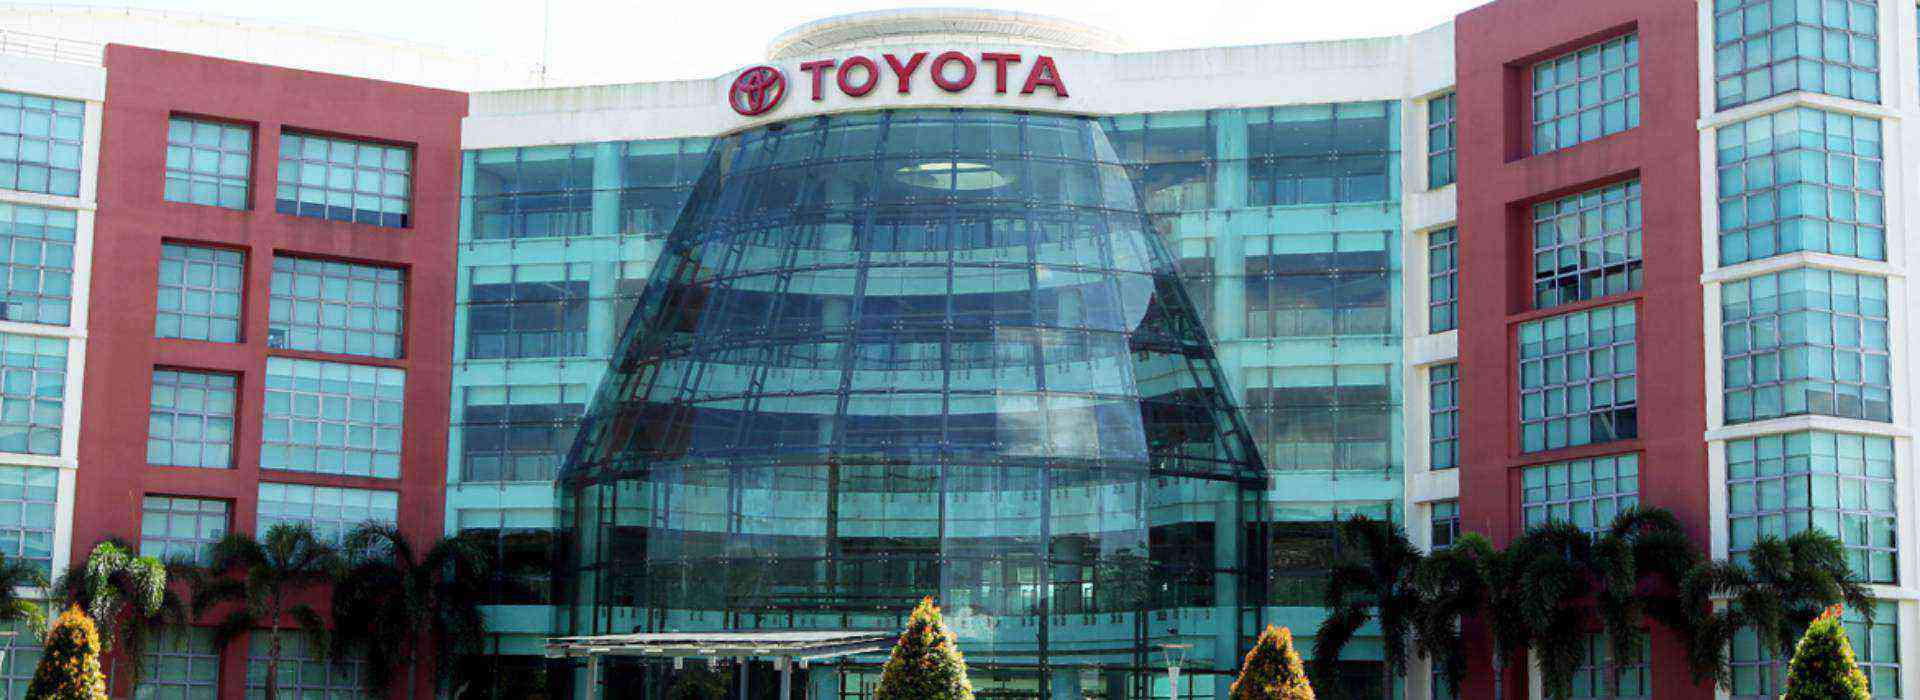 Toyota Malaysia Customer Service Number Address Customerservicedirectory